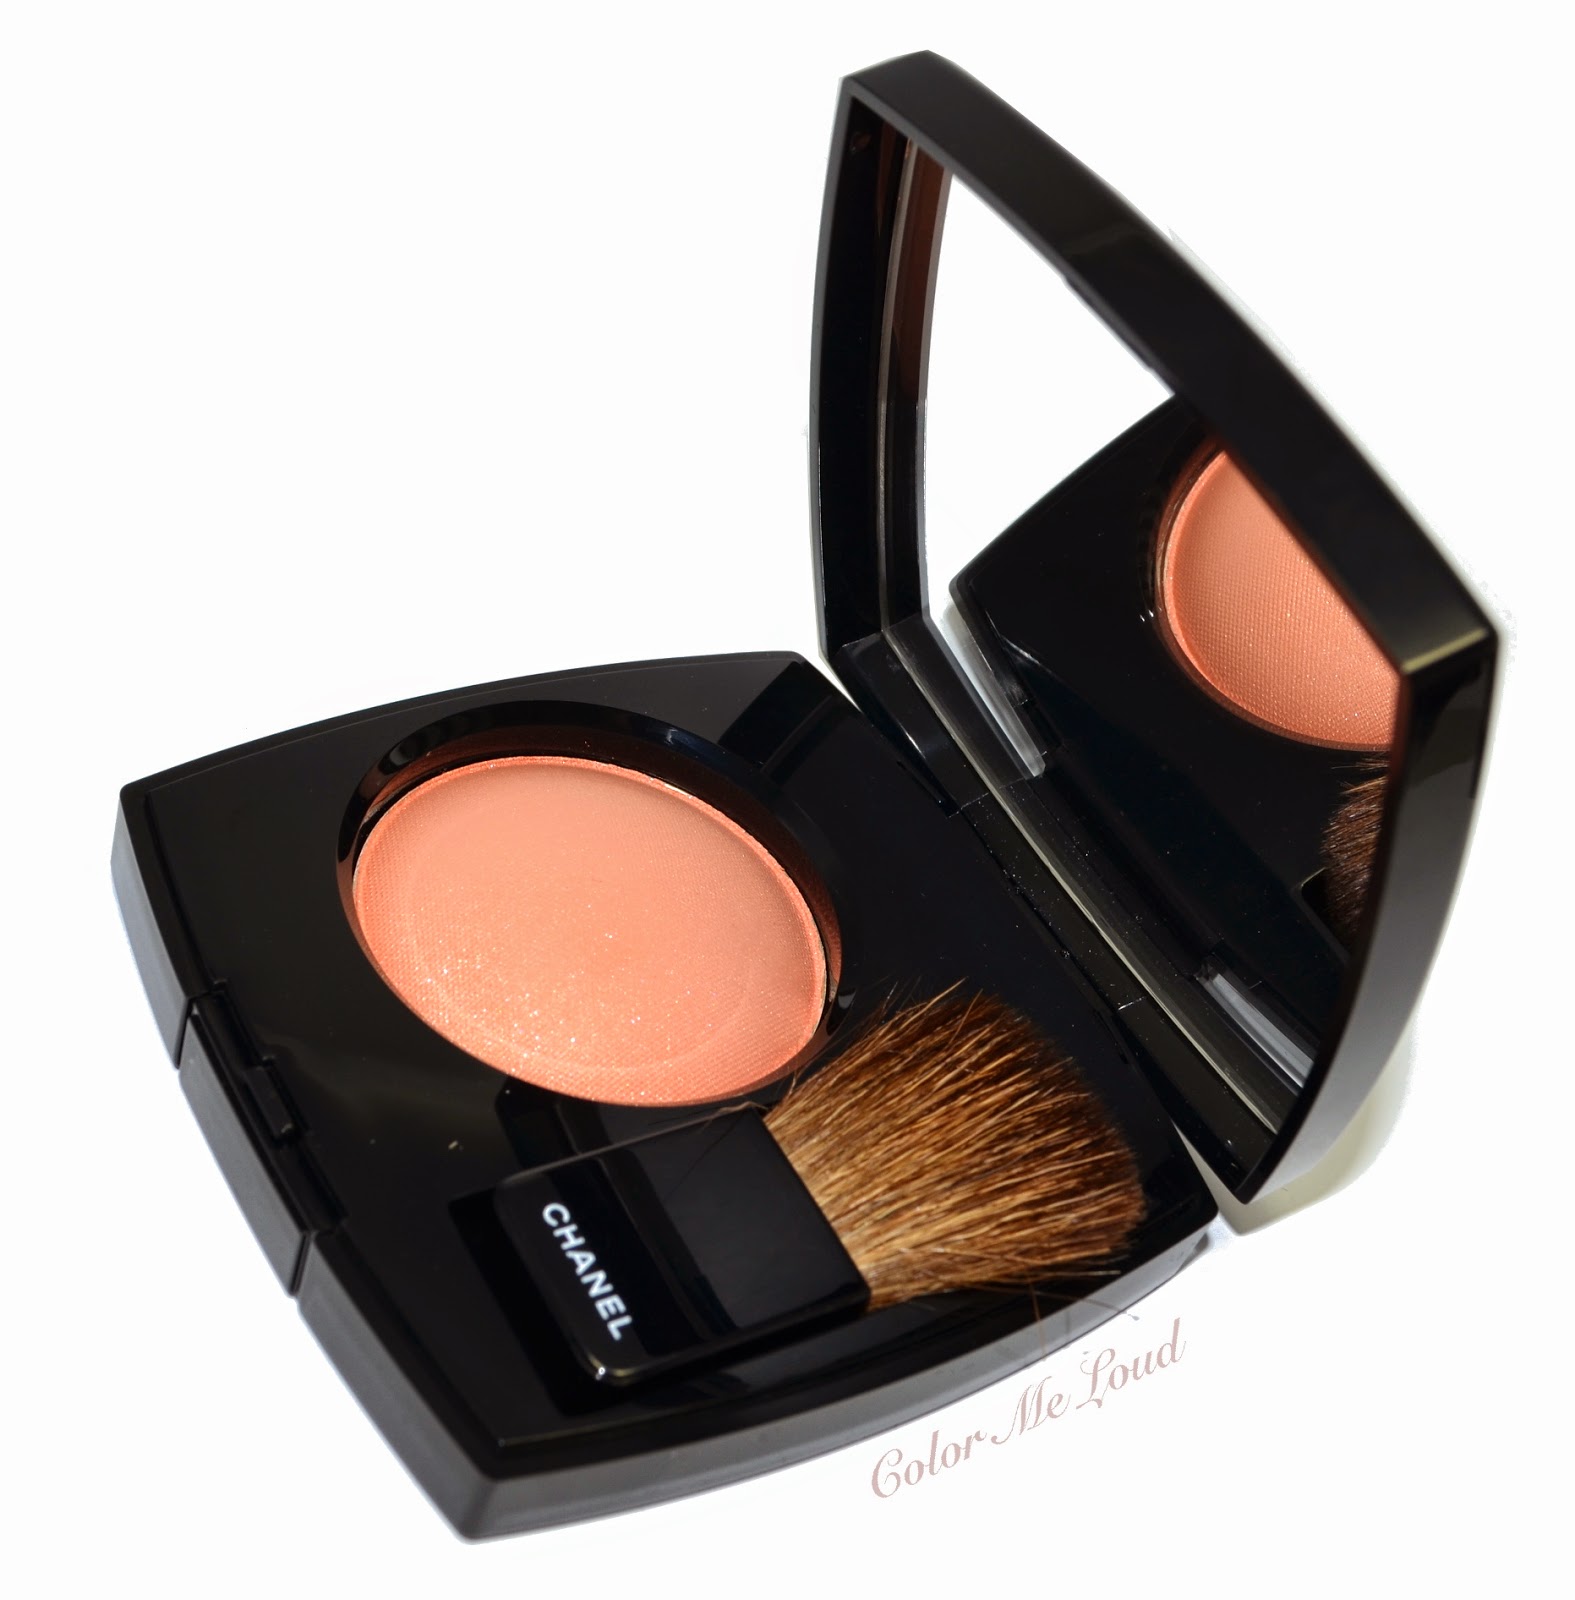 Chanel powder blush Joues Contraste Makeup Review